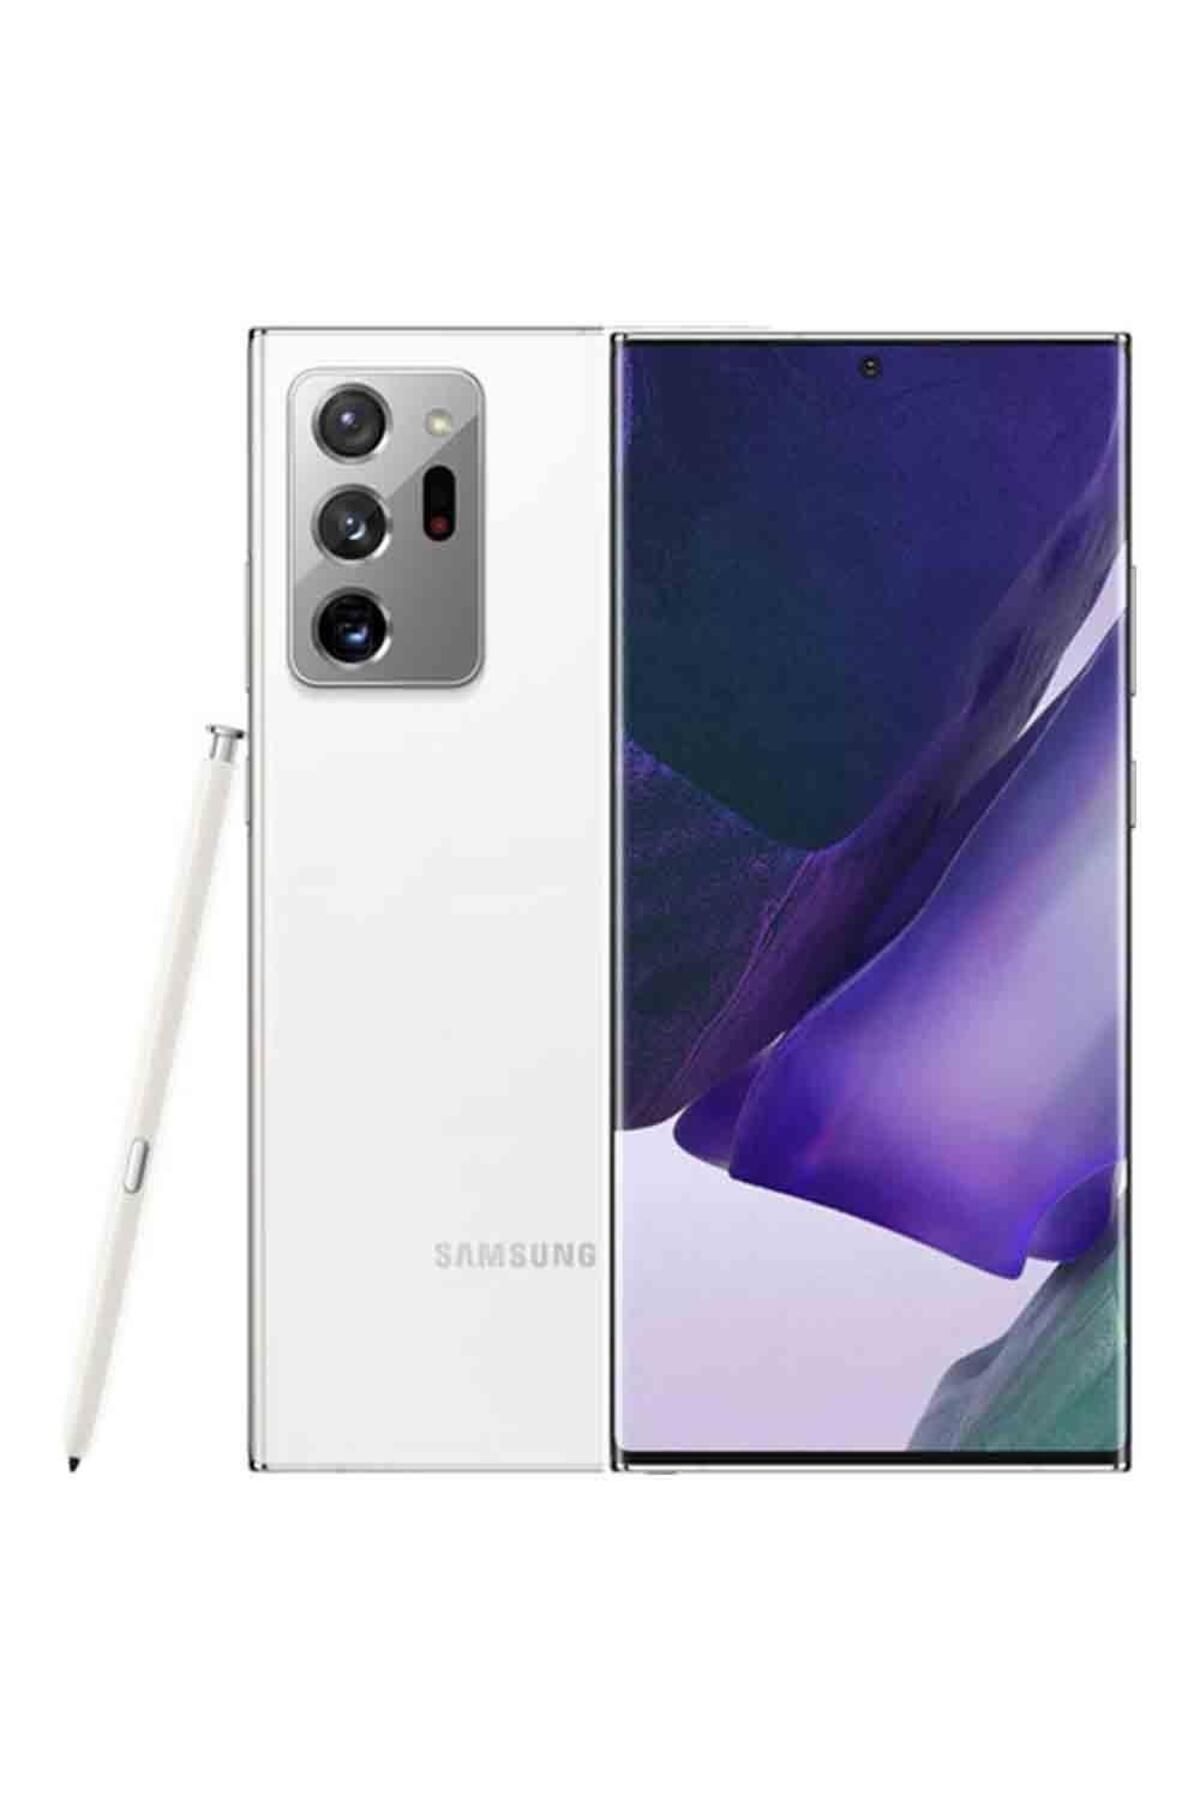 Samsung Yenilenmiş Samsung Galaxy Note 20 Ultra 256 GB (12 Ay Delta Servis Garantili) - B Grade